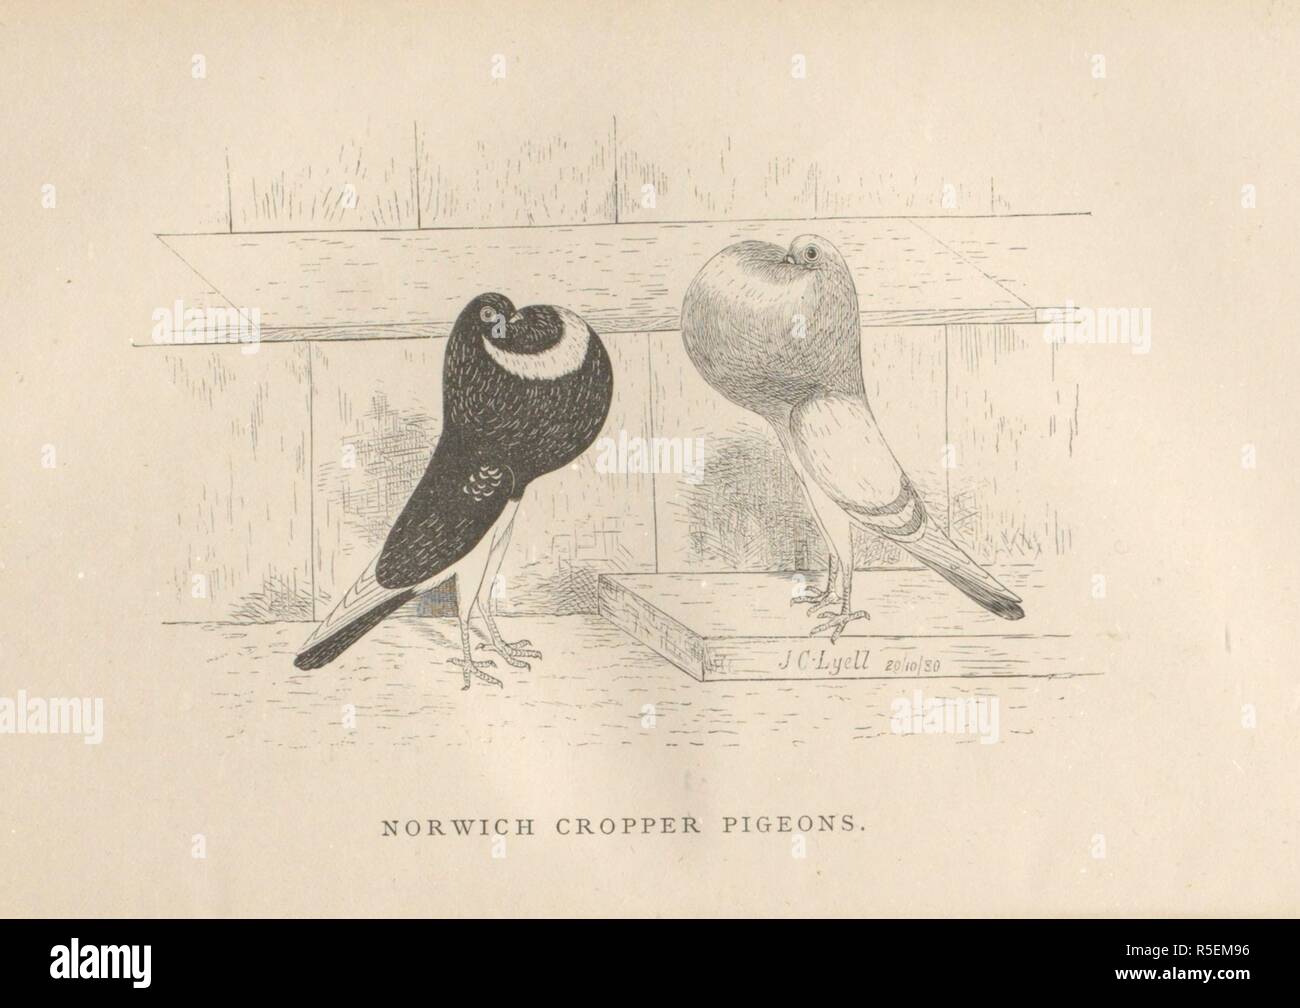 Norwich Cropper Pigeons